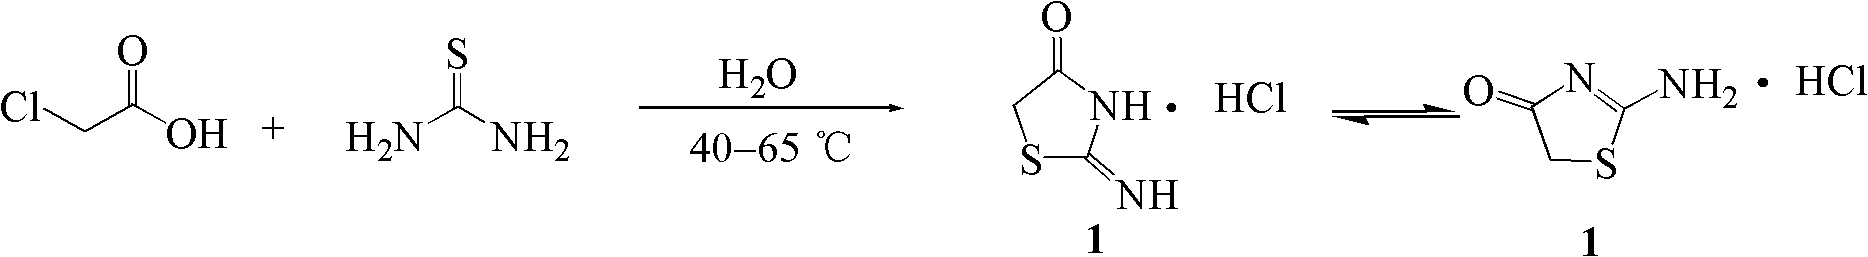 Method for synthesizing 2-iminothiazolidine-4-one and derivatives thereof